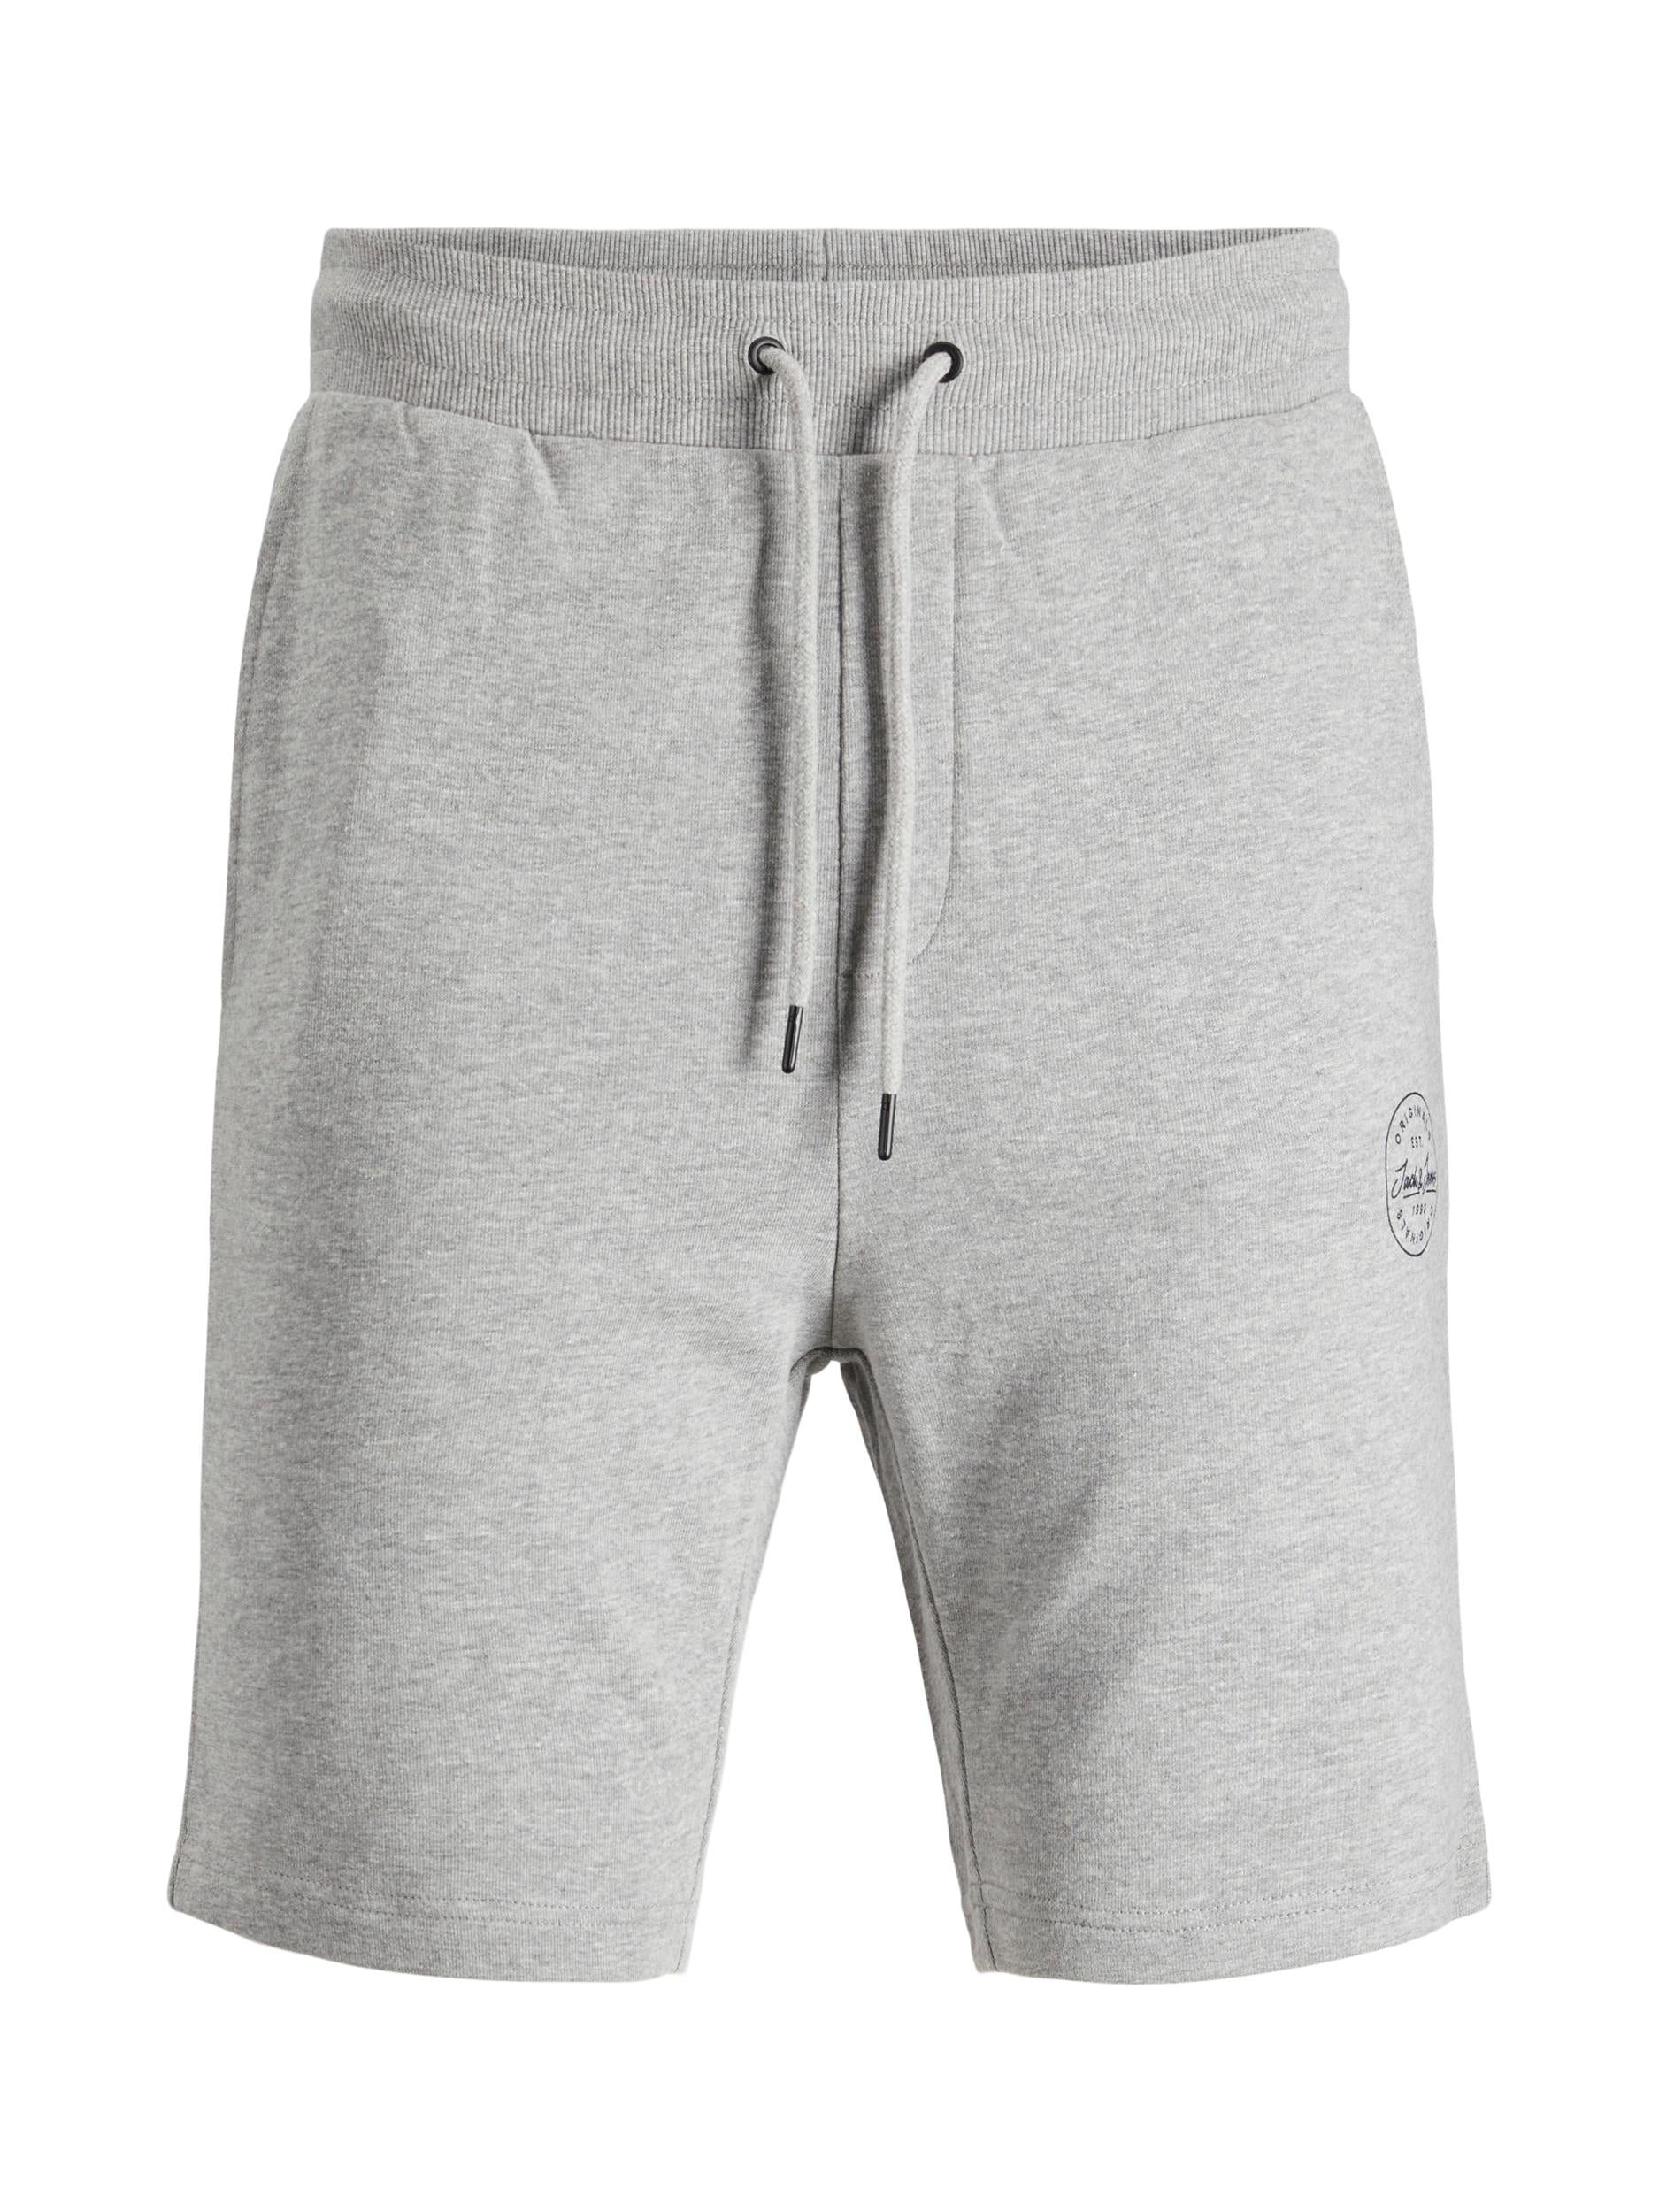 Jack & Jones Shark Sweat Shorts Light Grey - Raw Menswear